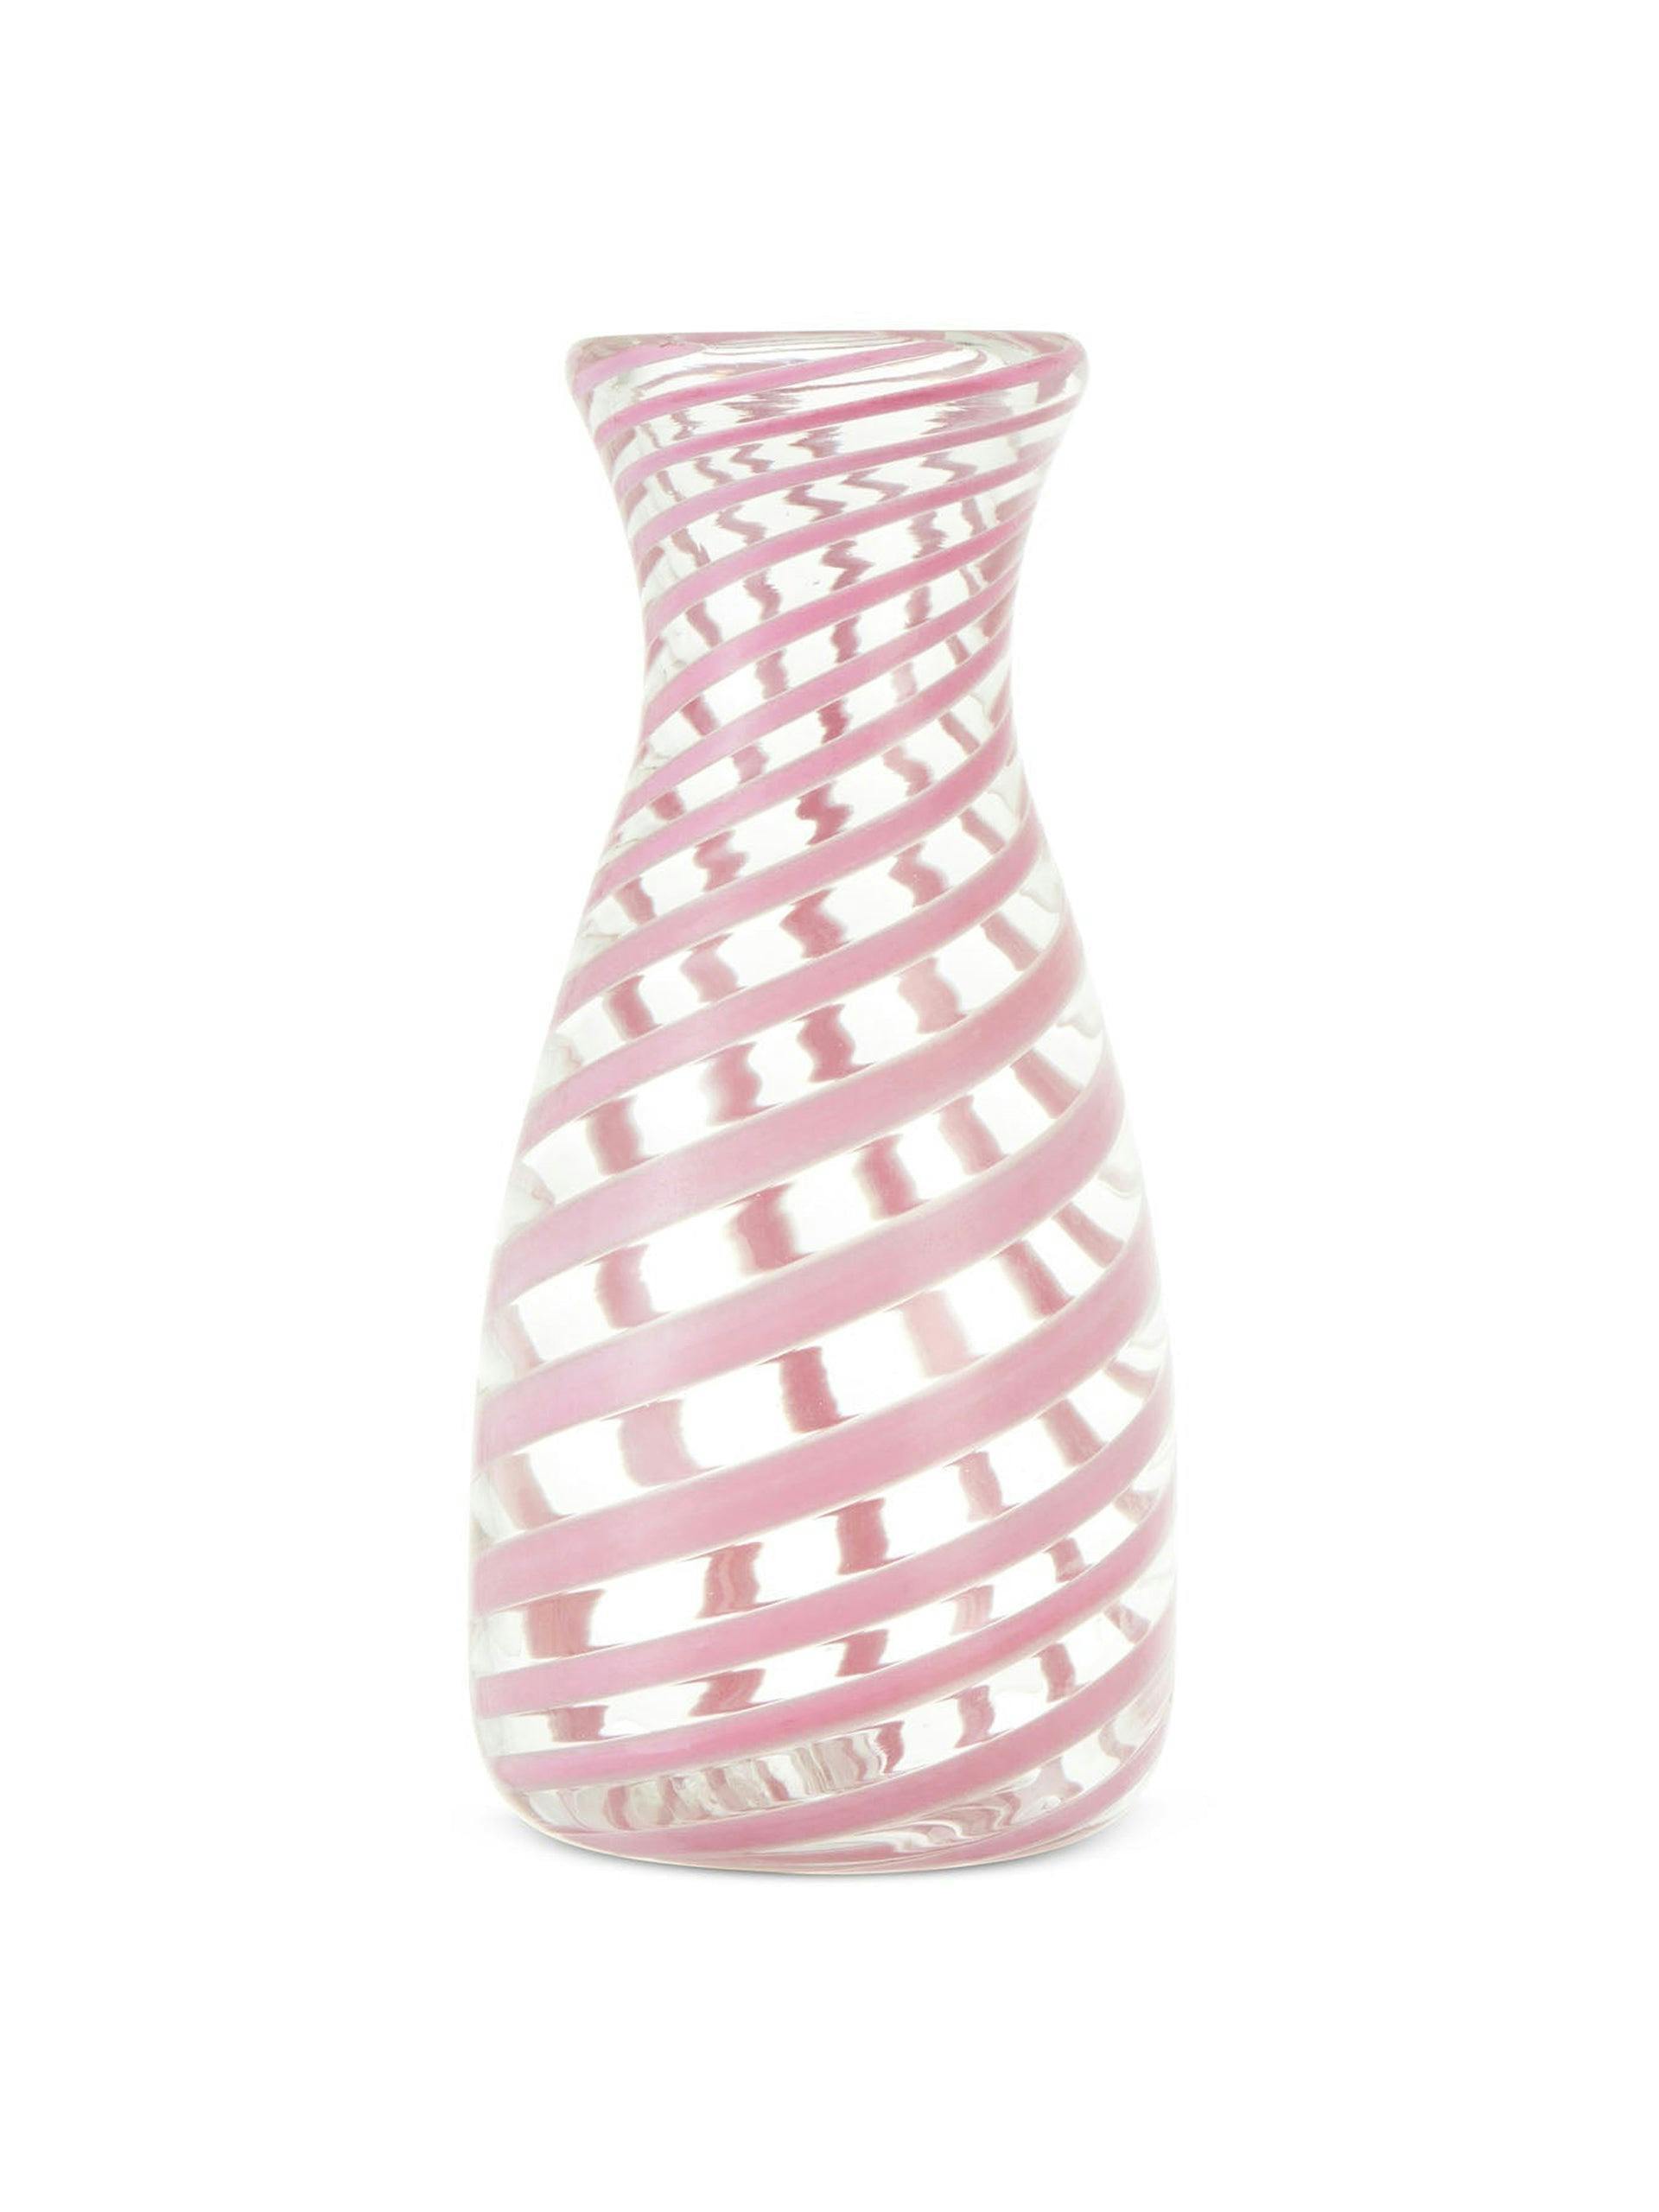 Alicia pink murano glass carafe